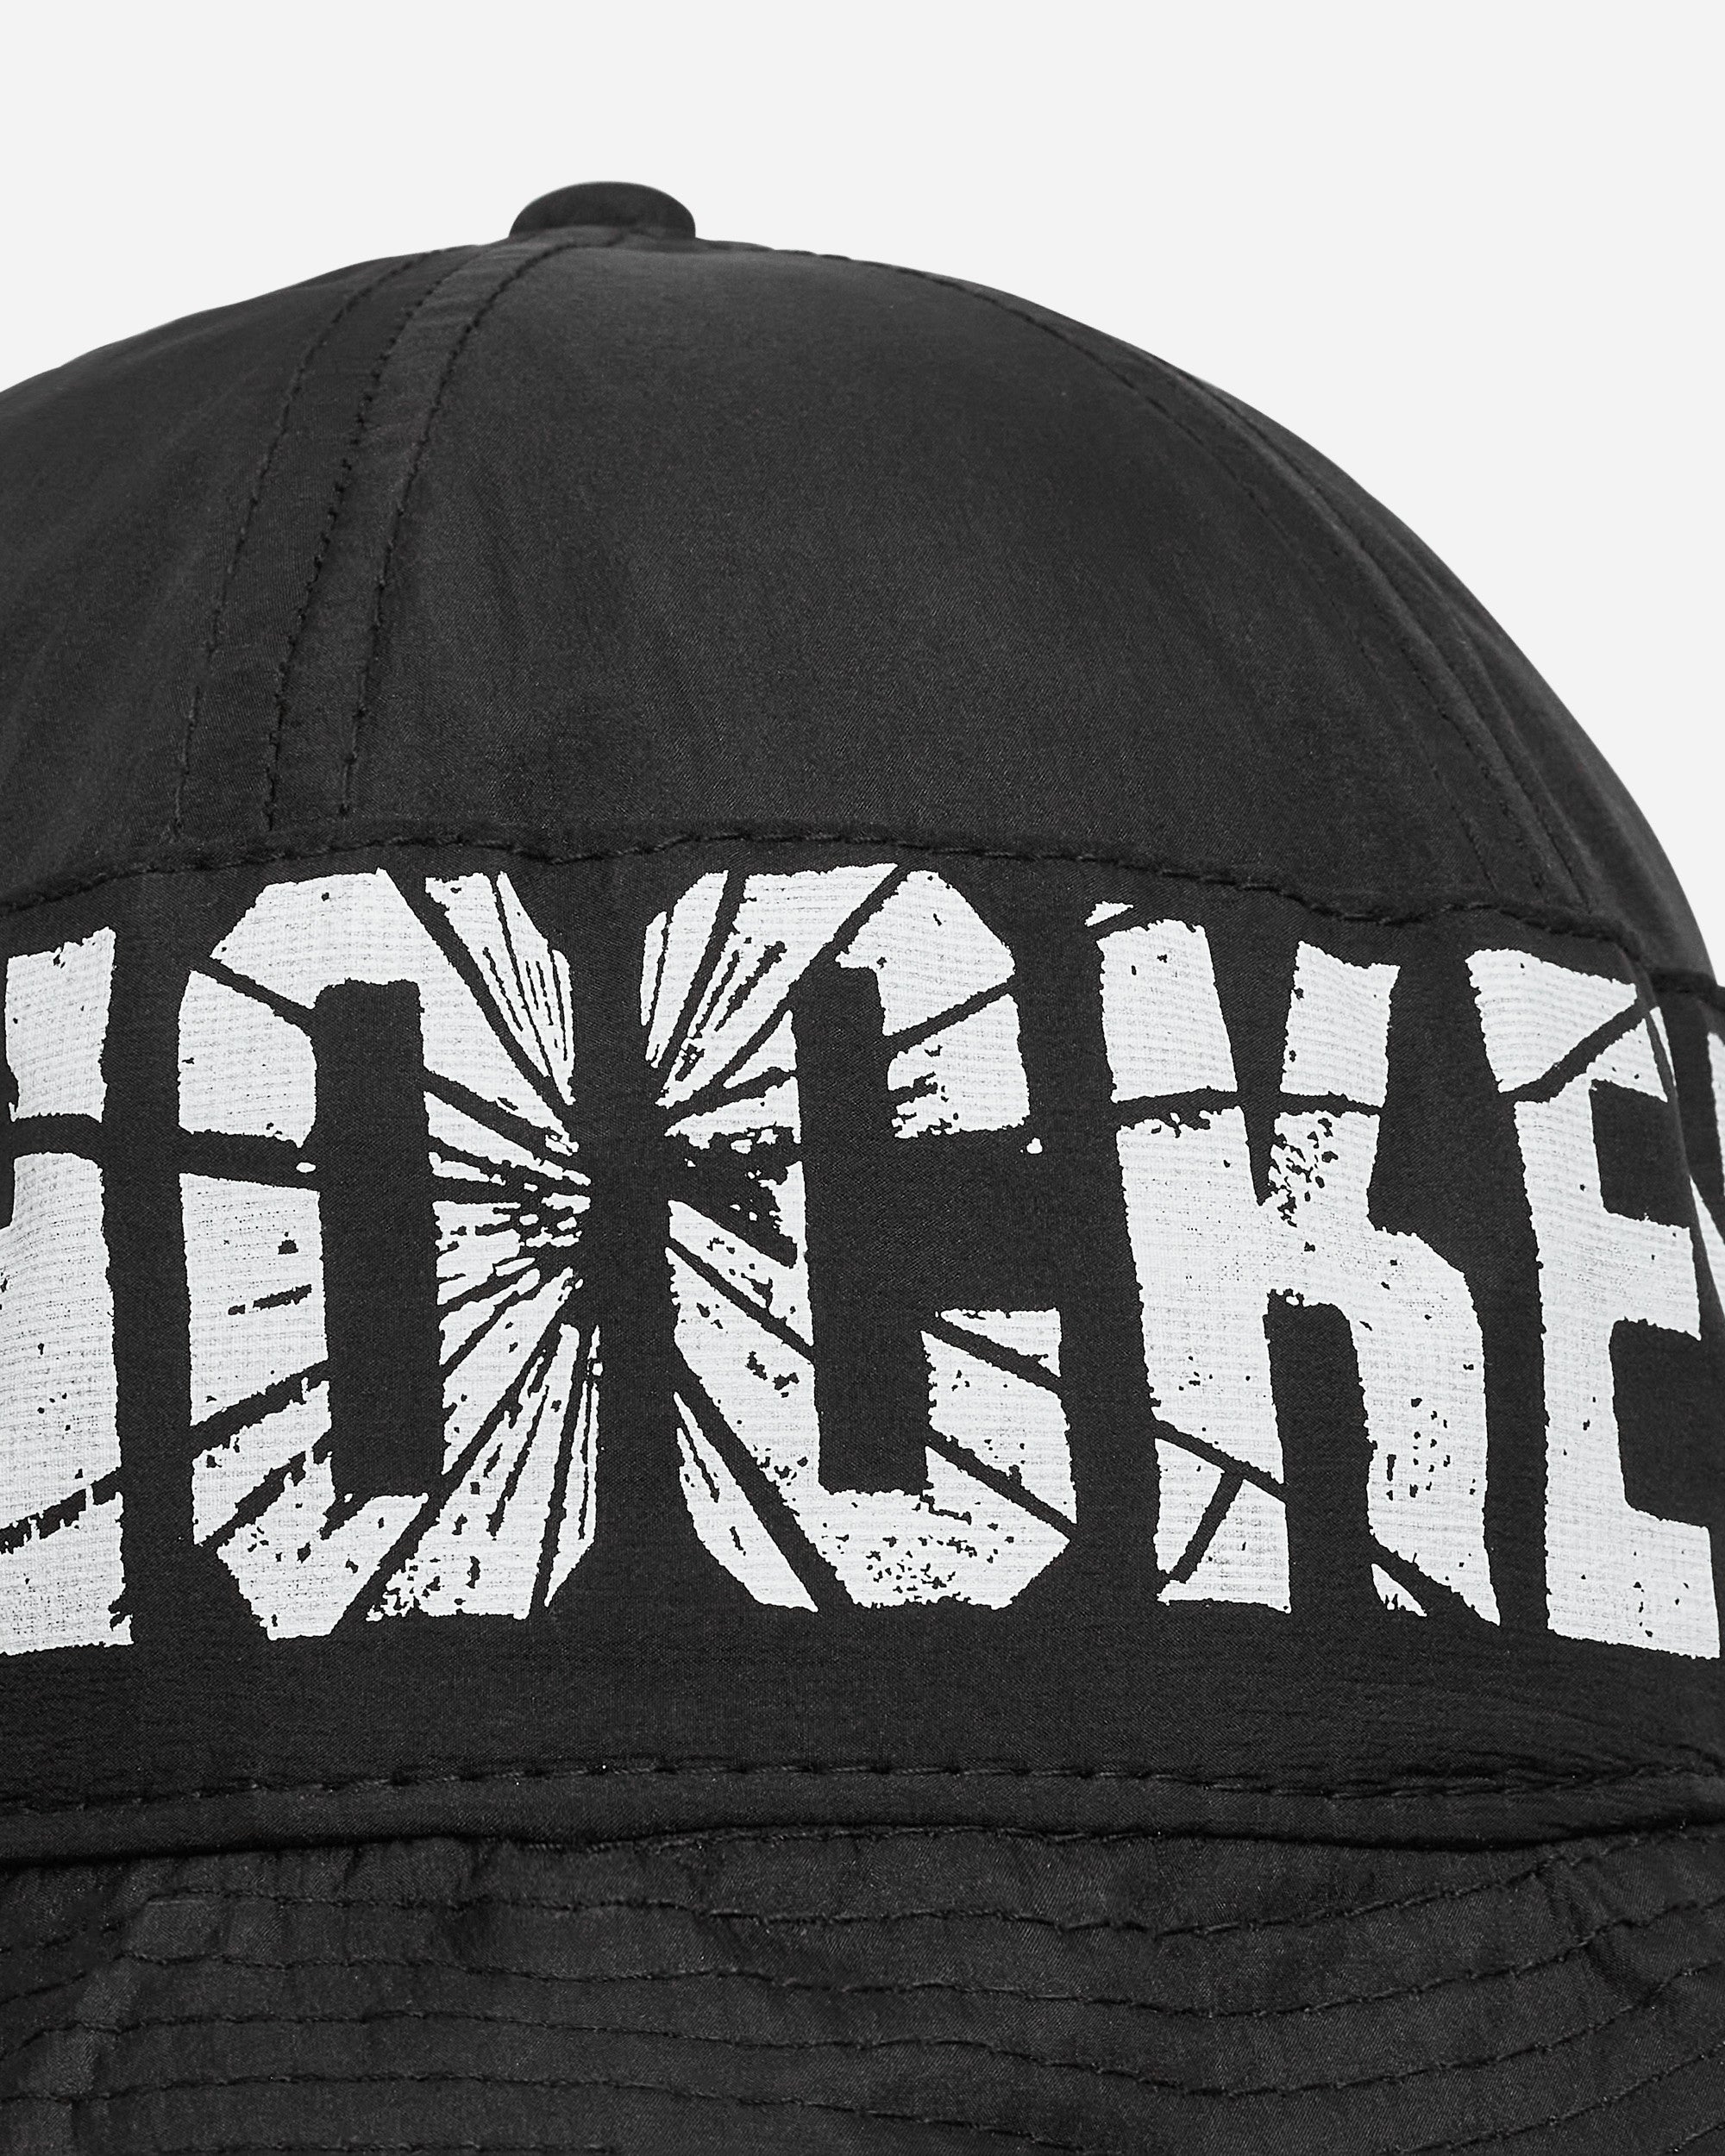 Hockey Hockey Crinkle Bell Bucket Hat Black Hats Bucket PN1869 001